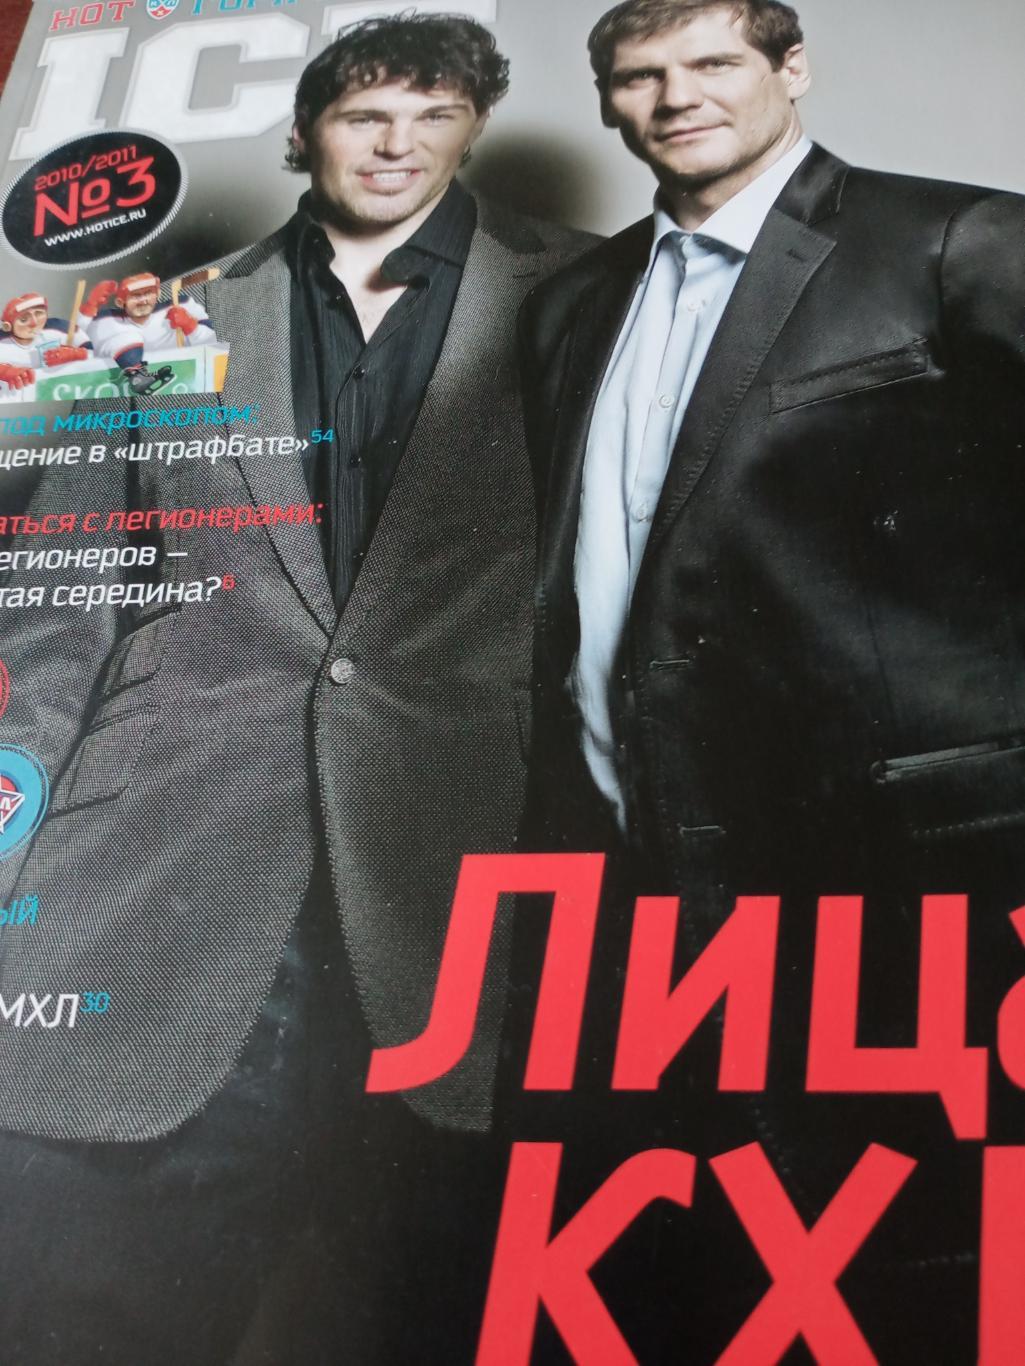 Горячий лёд. №3 (2010/11). Лица КХЛ: Яромир Ягр и Алексей Яшин